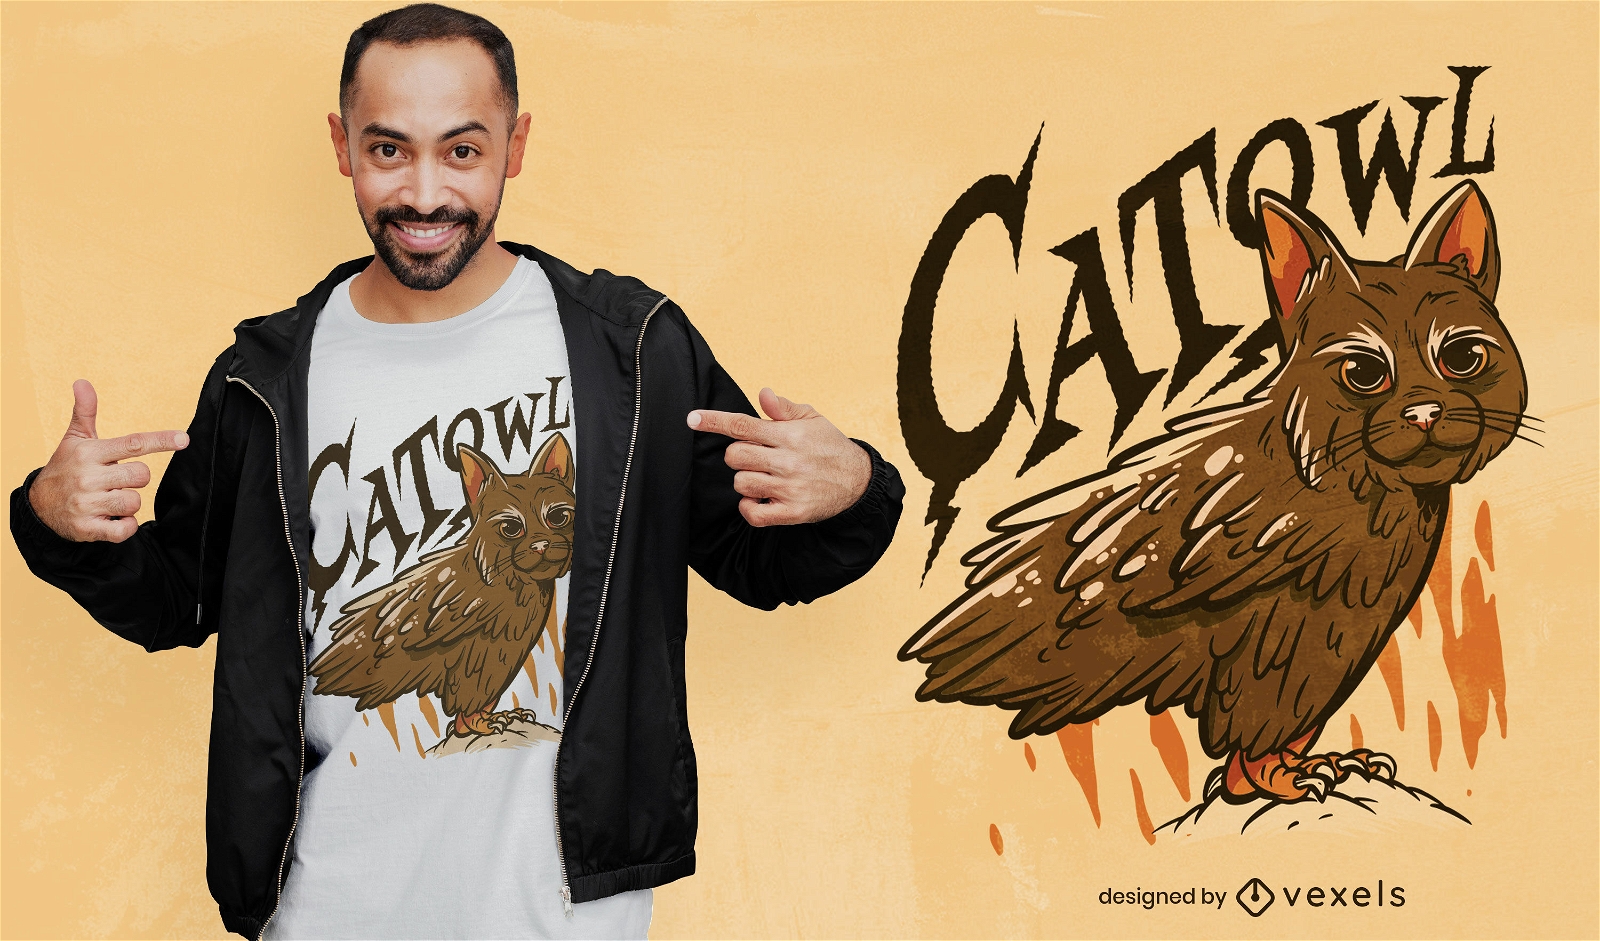 Cool cat owl t-shirt design